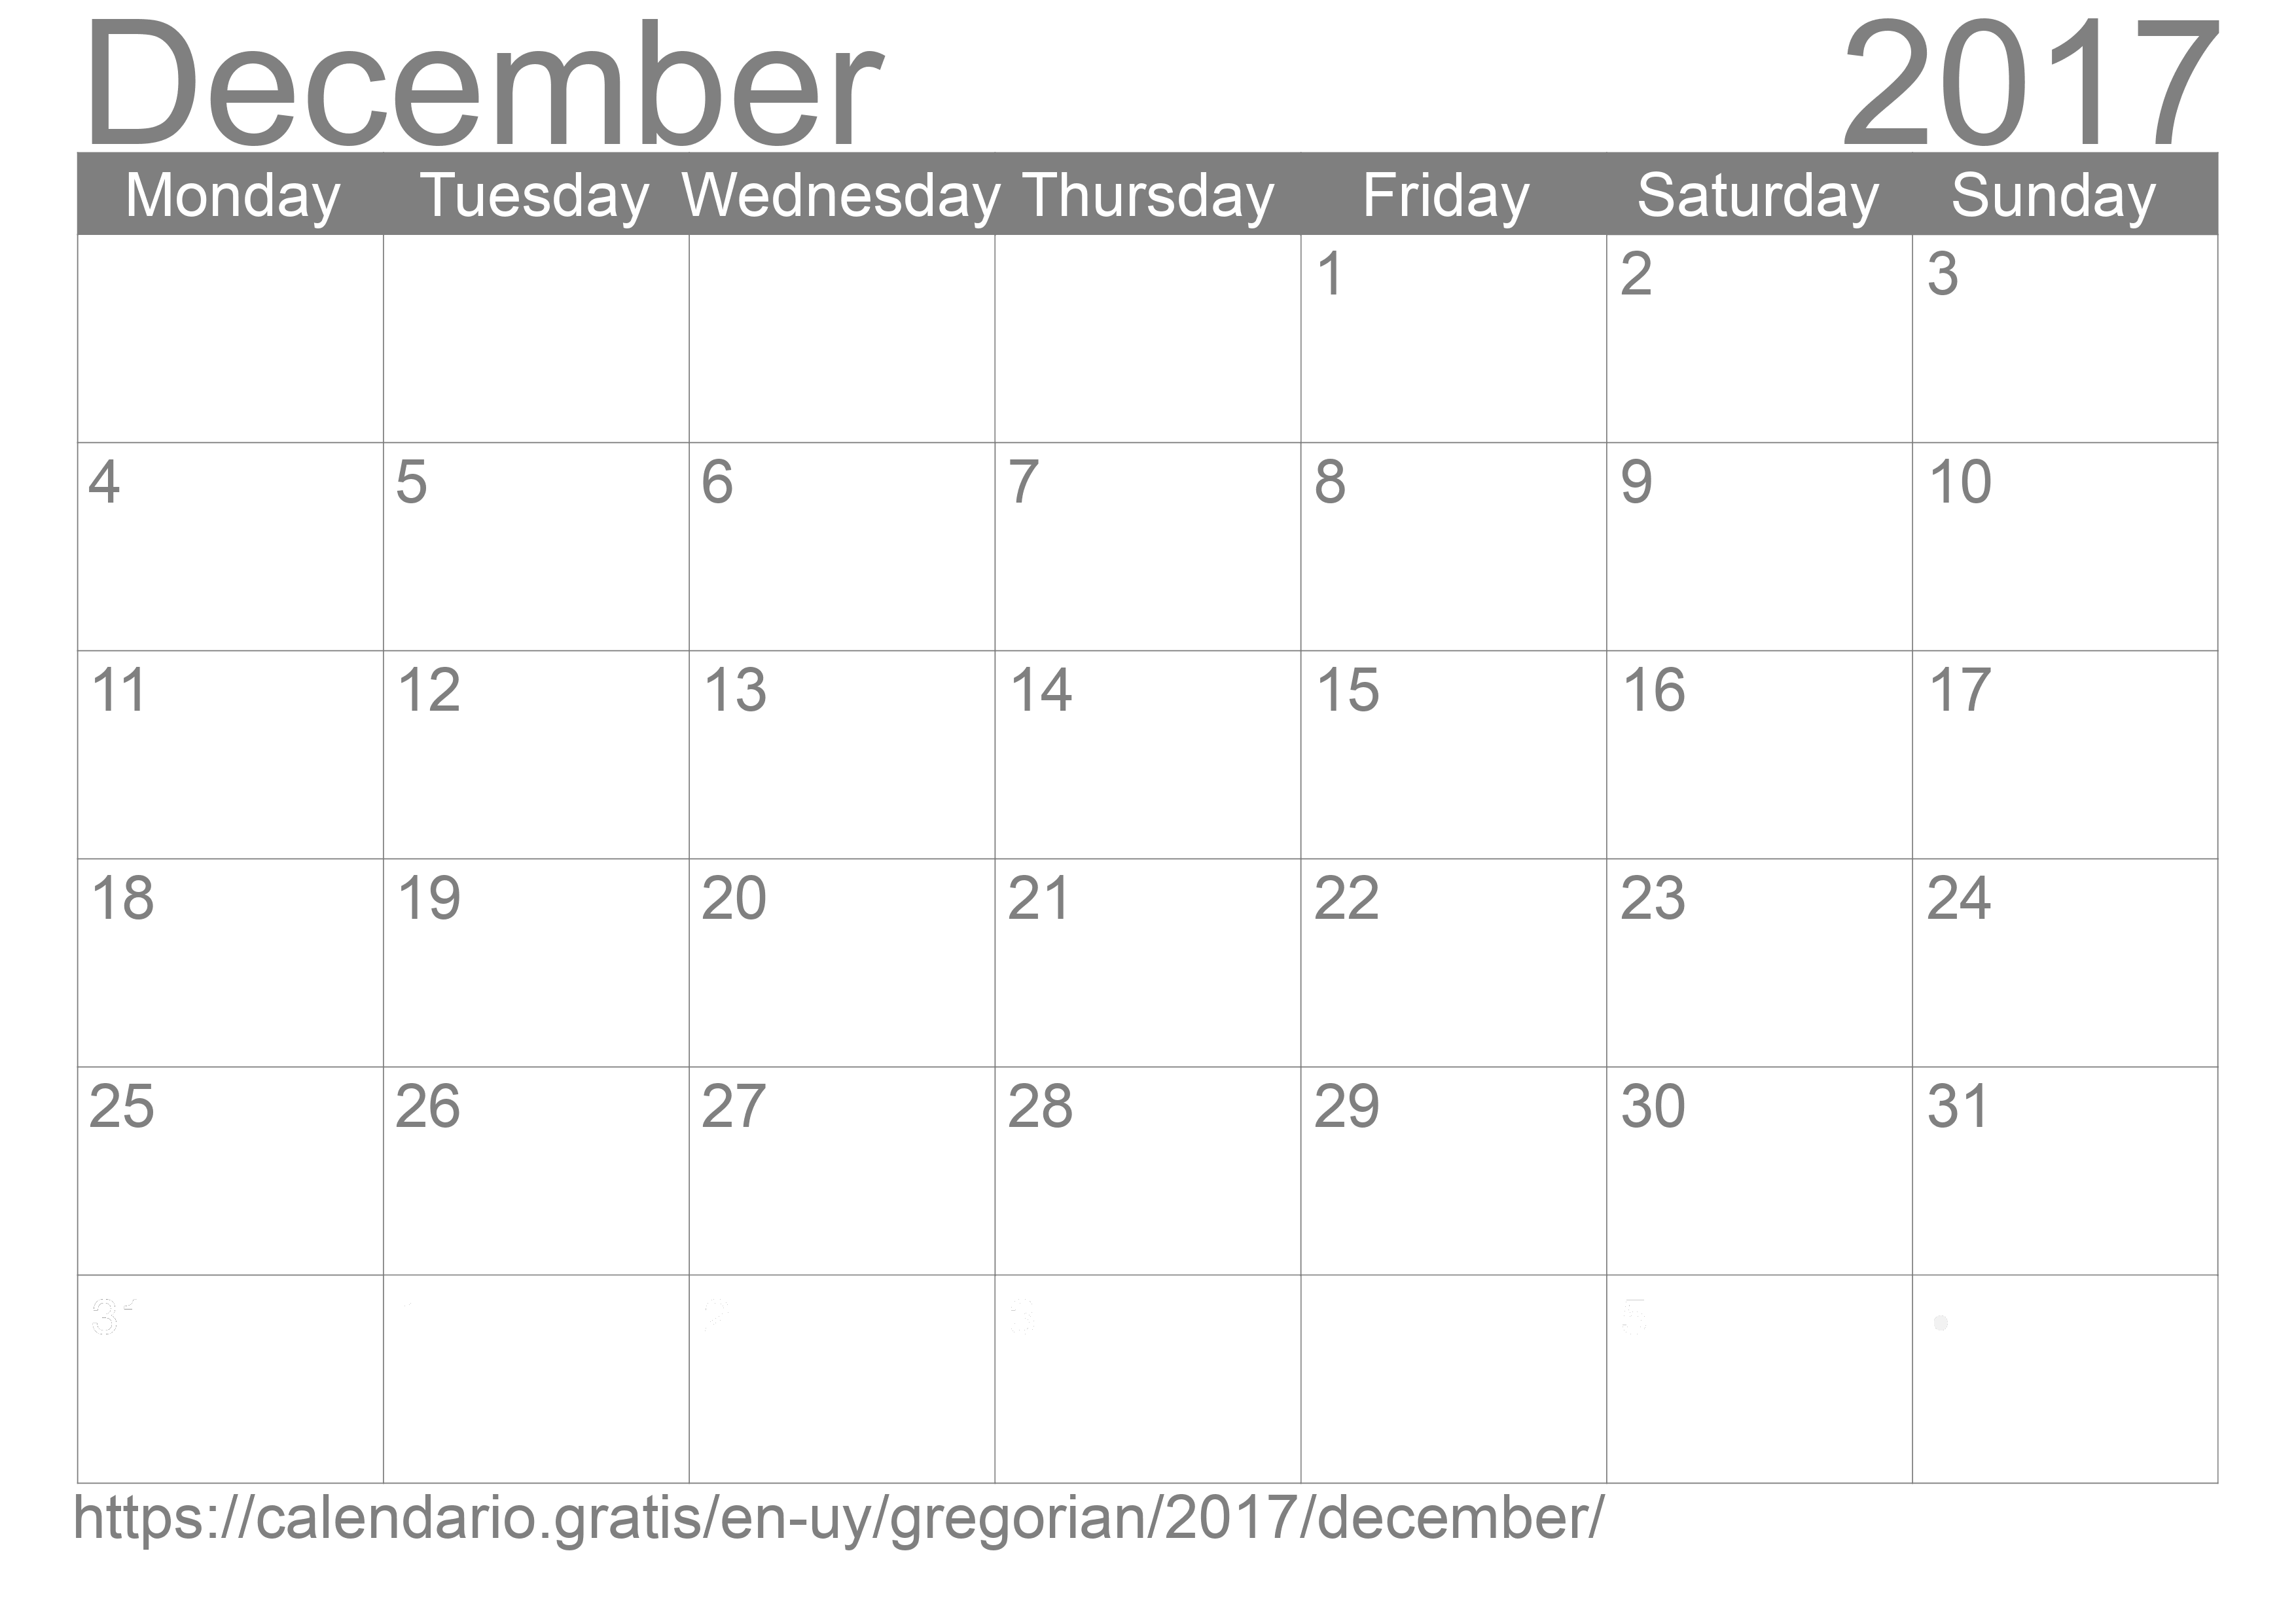 Calendar December 2017 to print